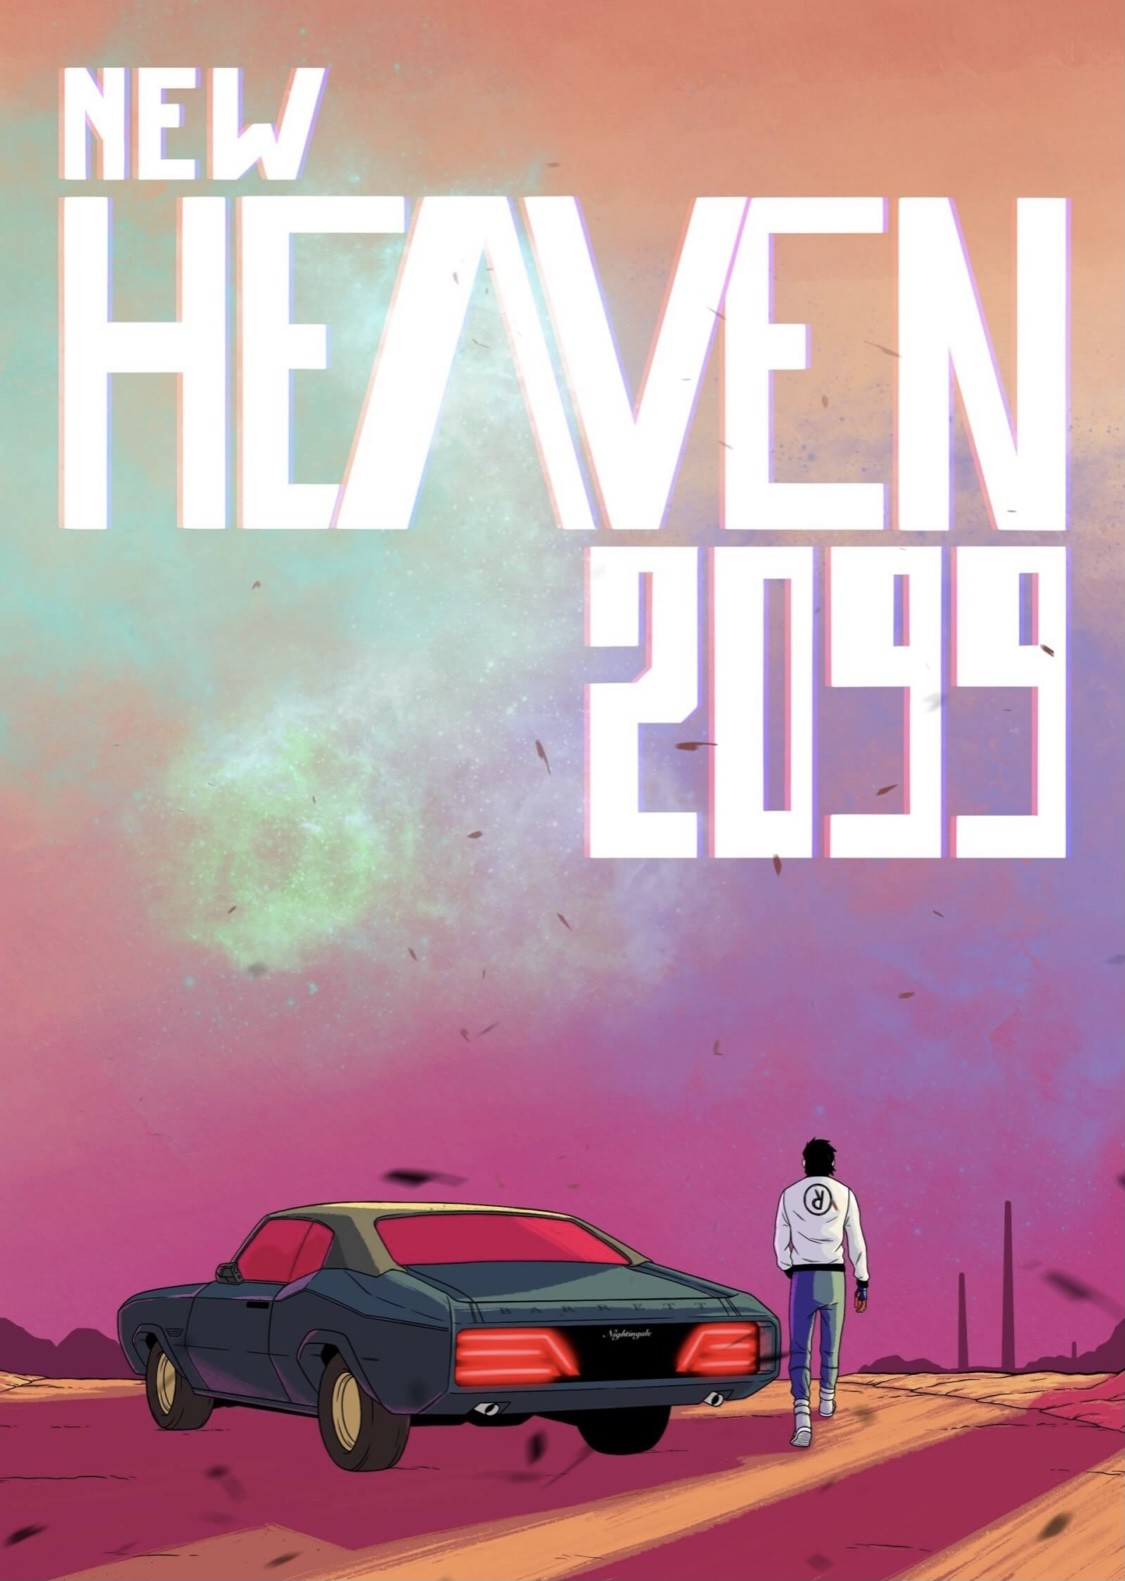 New heaven 2099